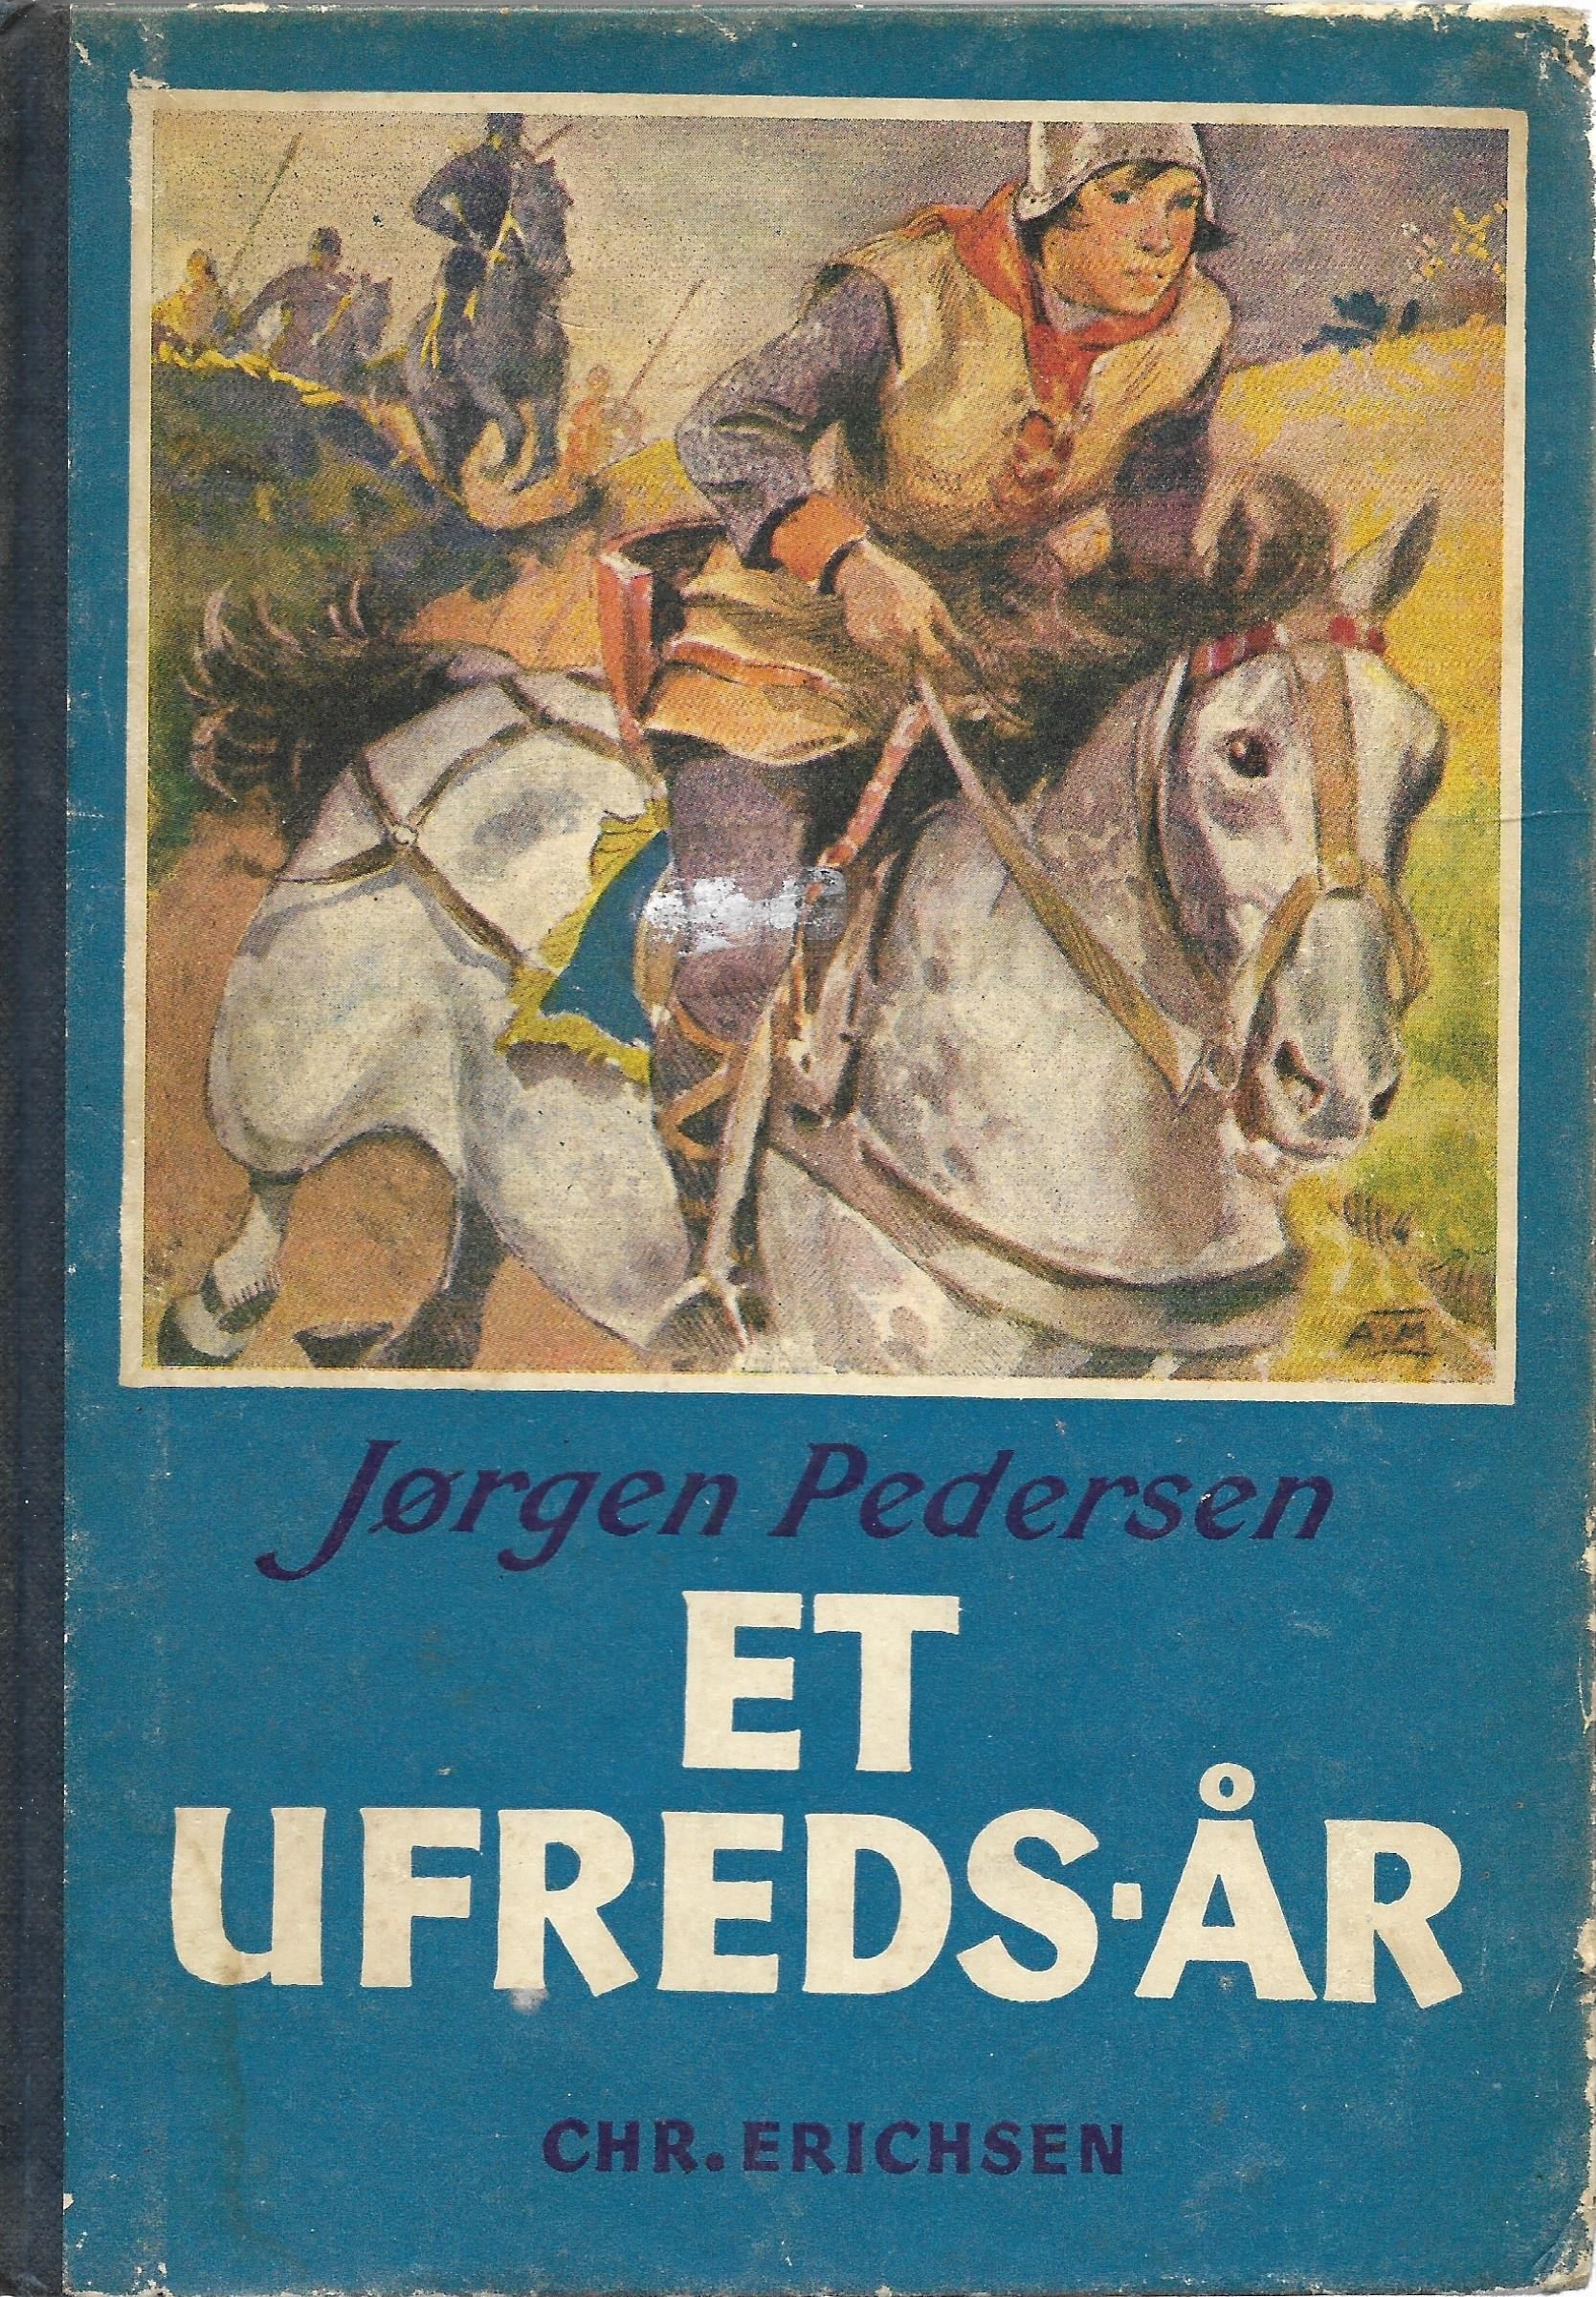 Et ufreds-år - Jørgen Pedersen 1952-1